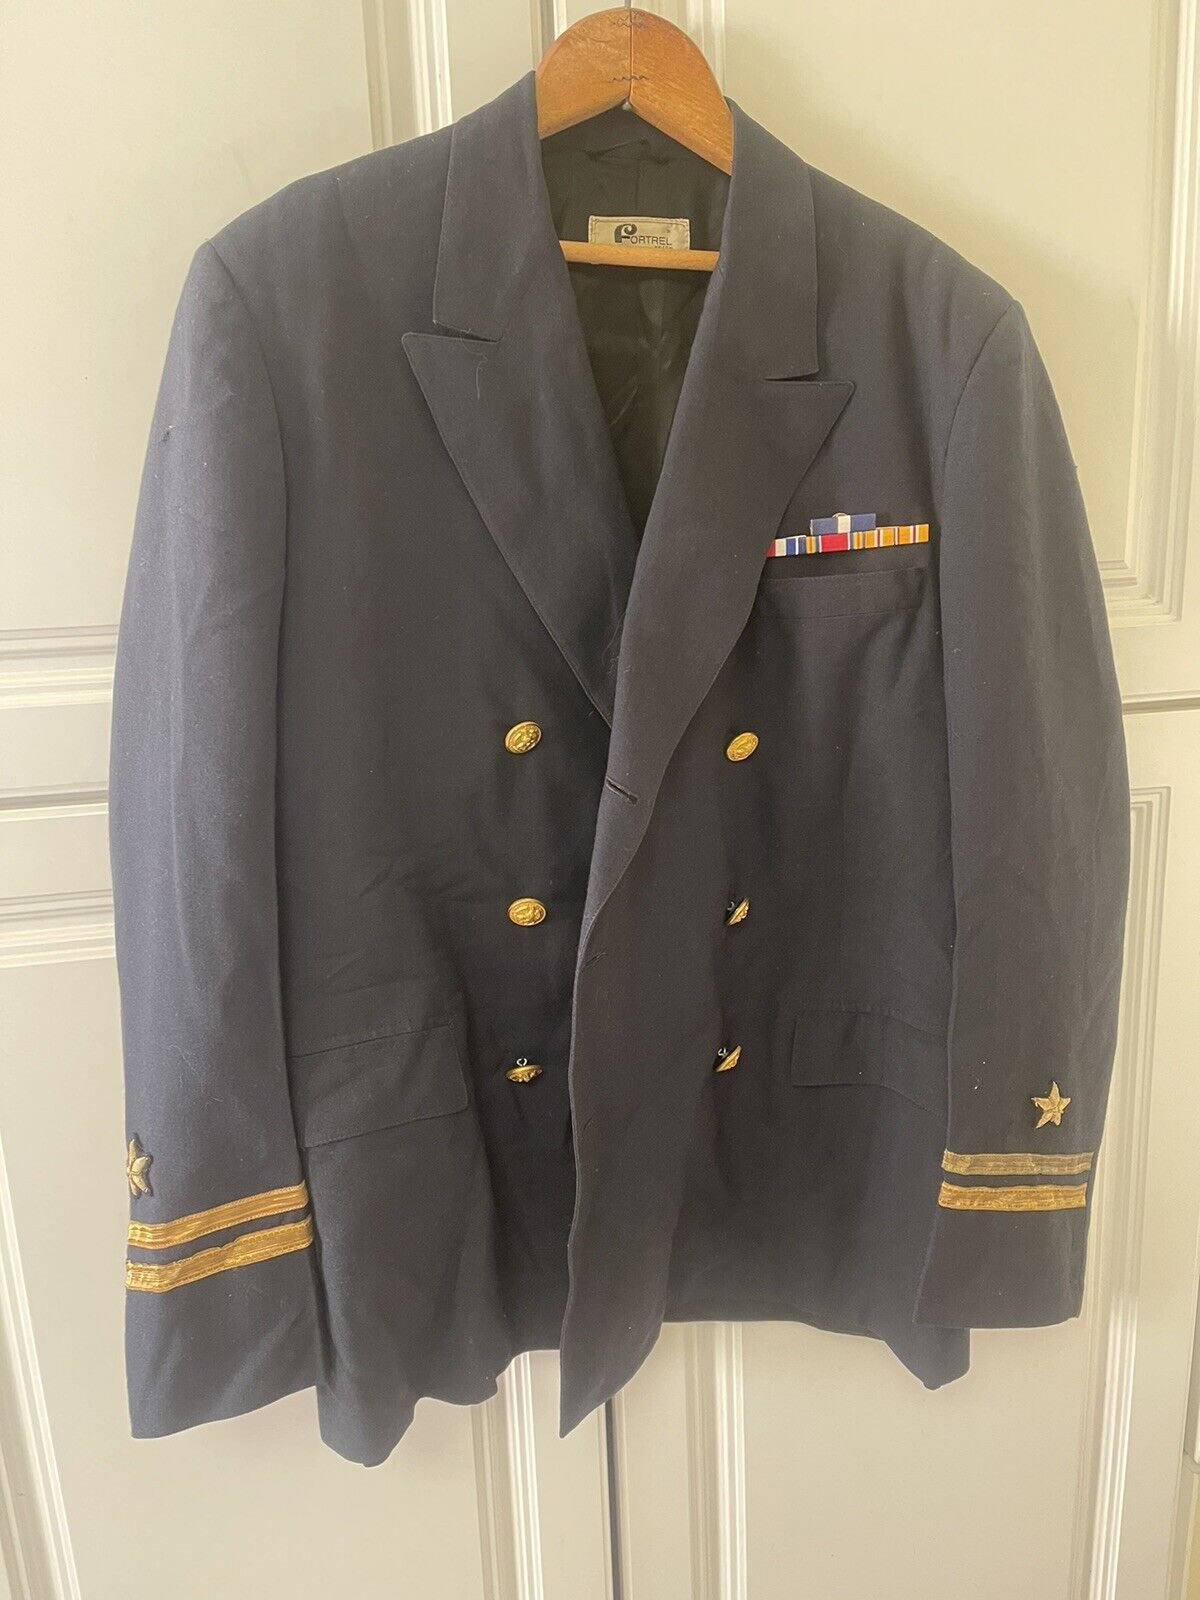 Rare Named Navy Cross, Silver Star, WWII Ribbons Dress Blue Uniform Coat Jacket